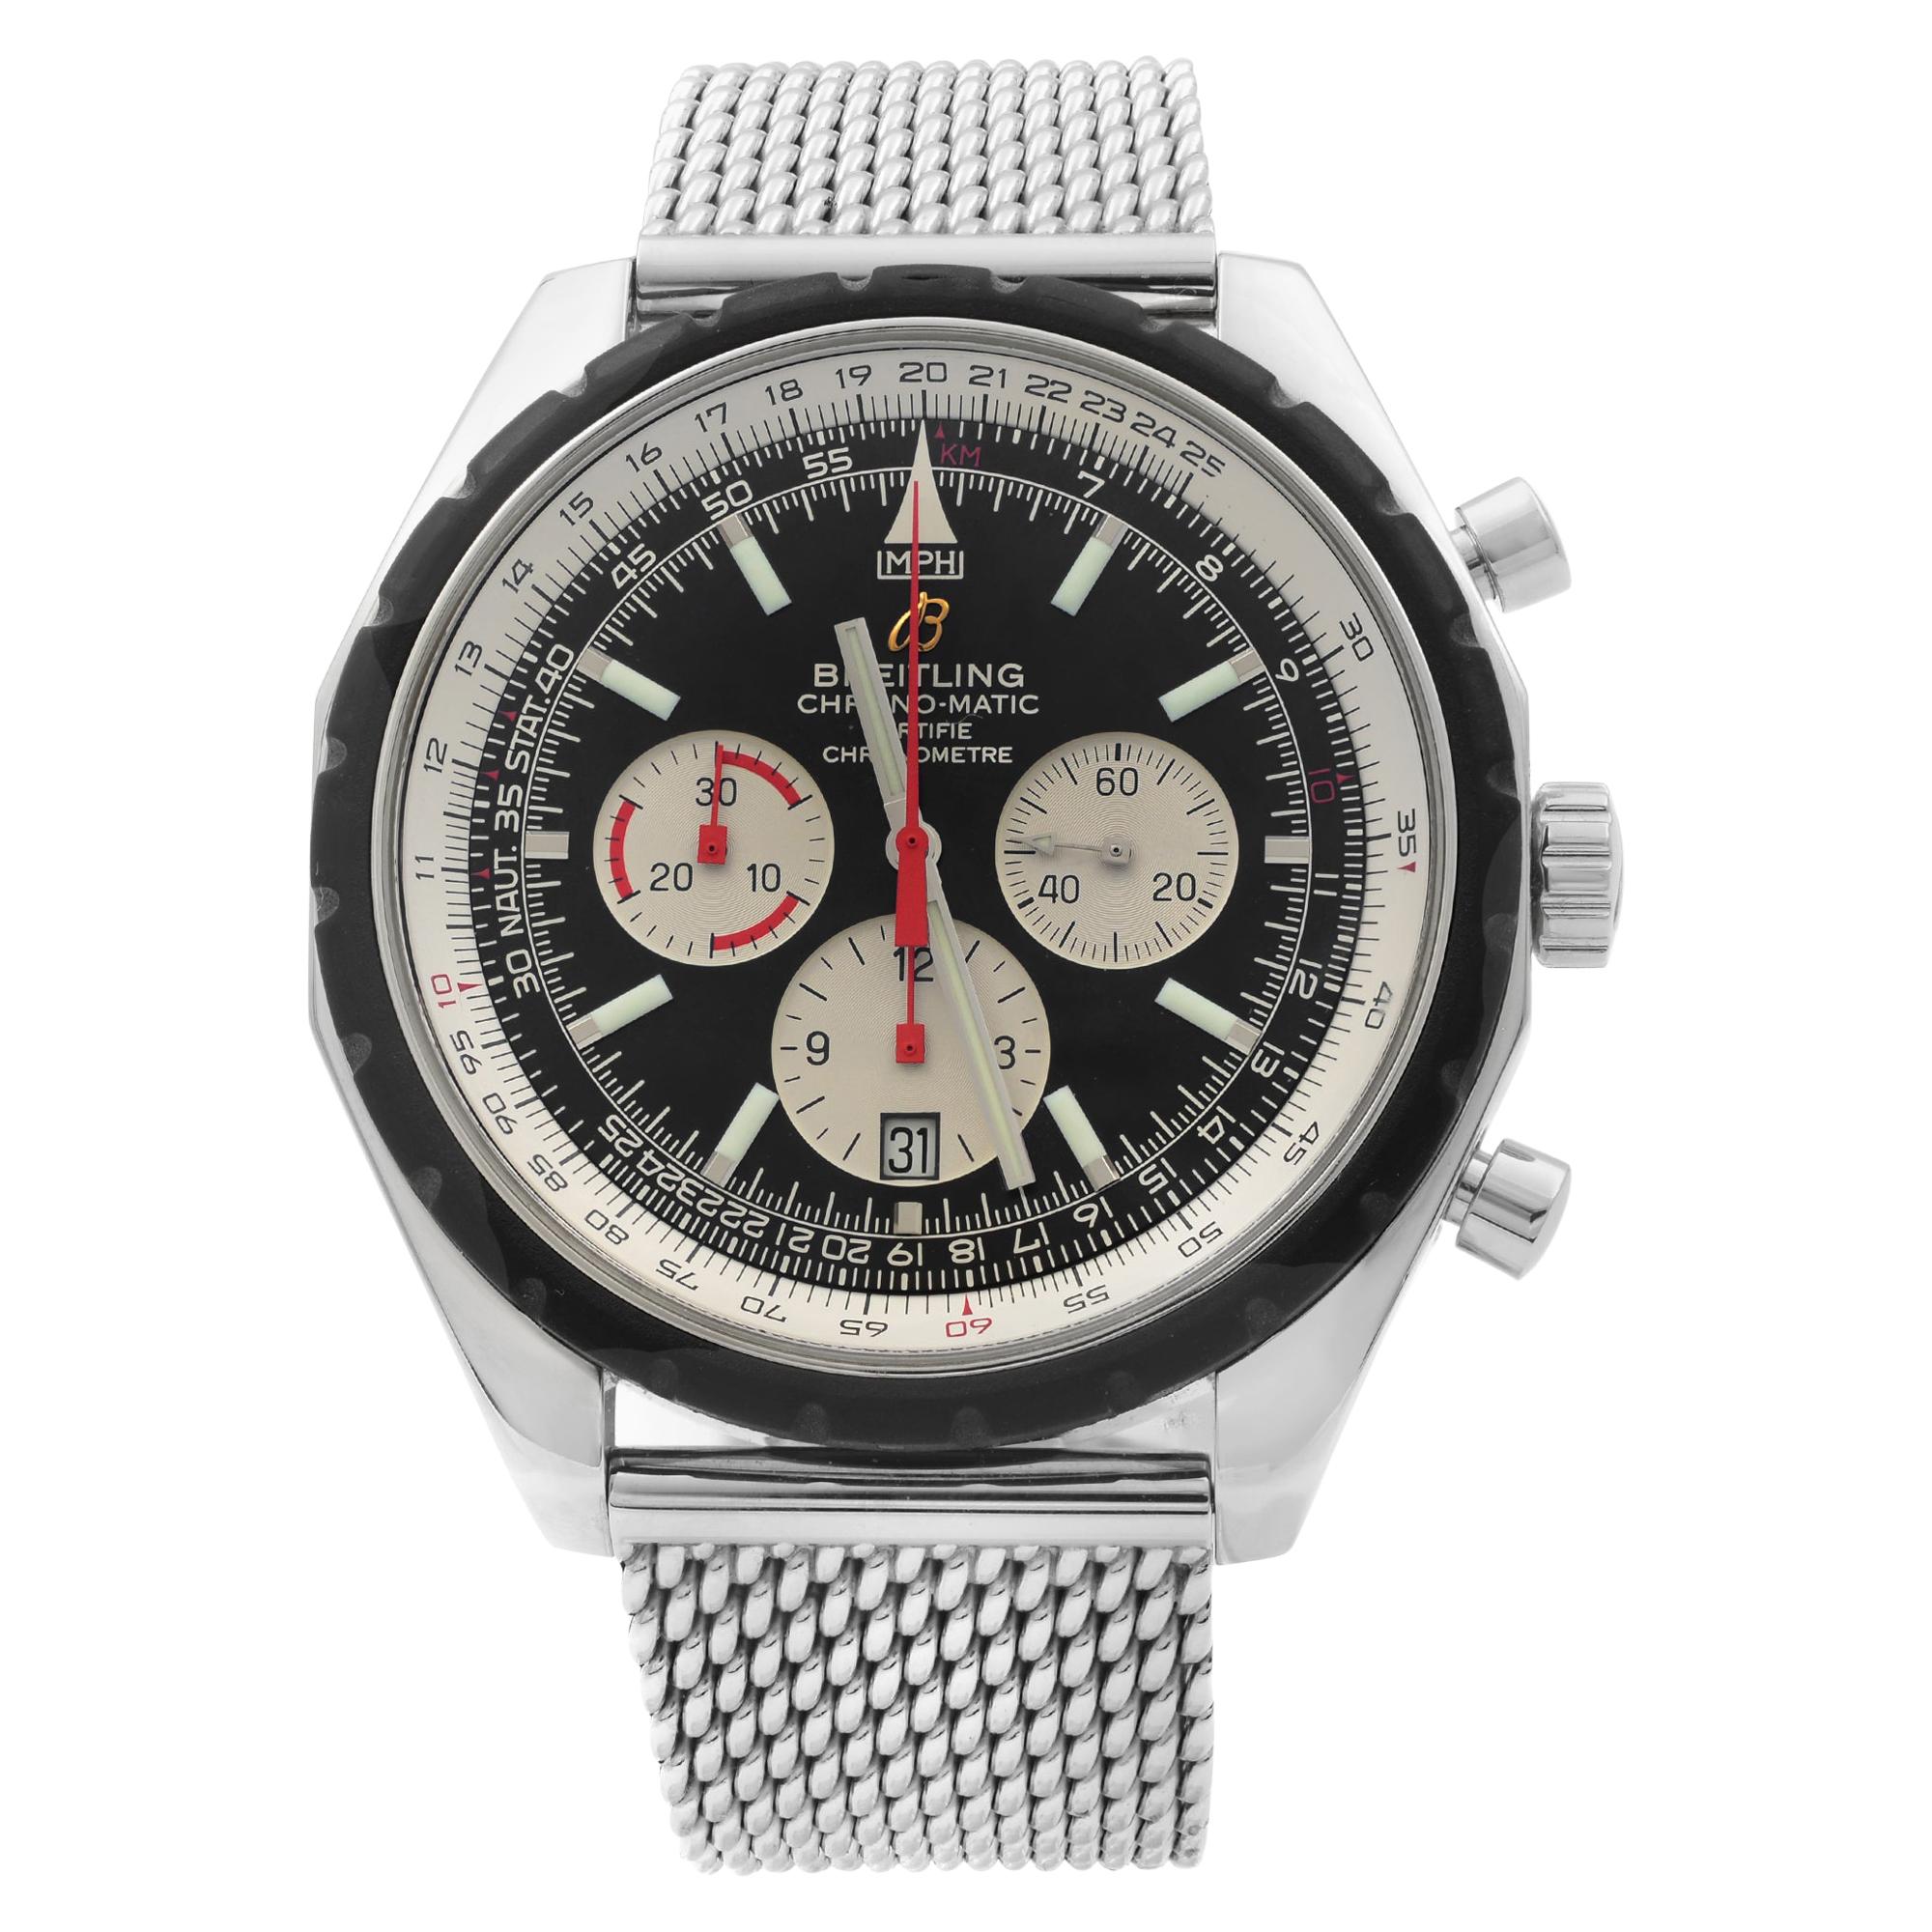 Breitling Chrono-Matic 49 Steel Black Dial Men's Watch A1436002/B920-152A